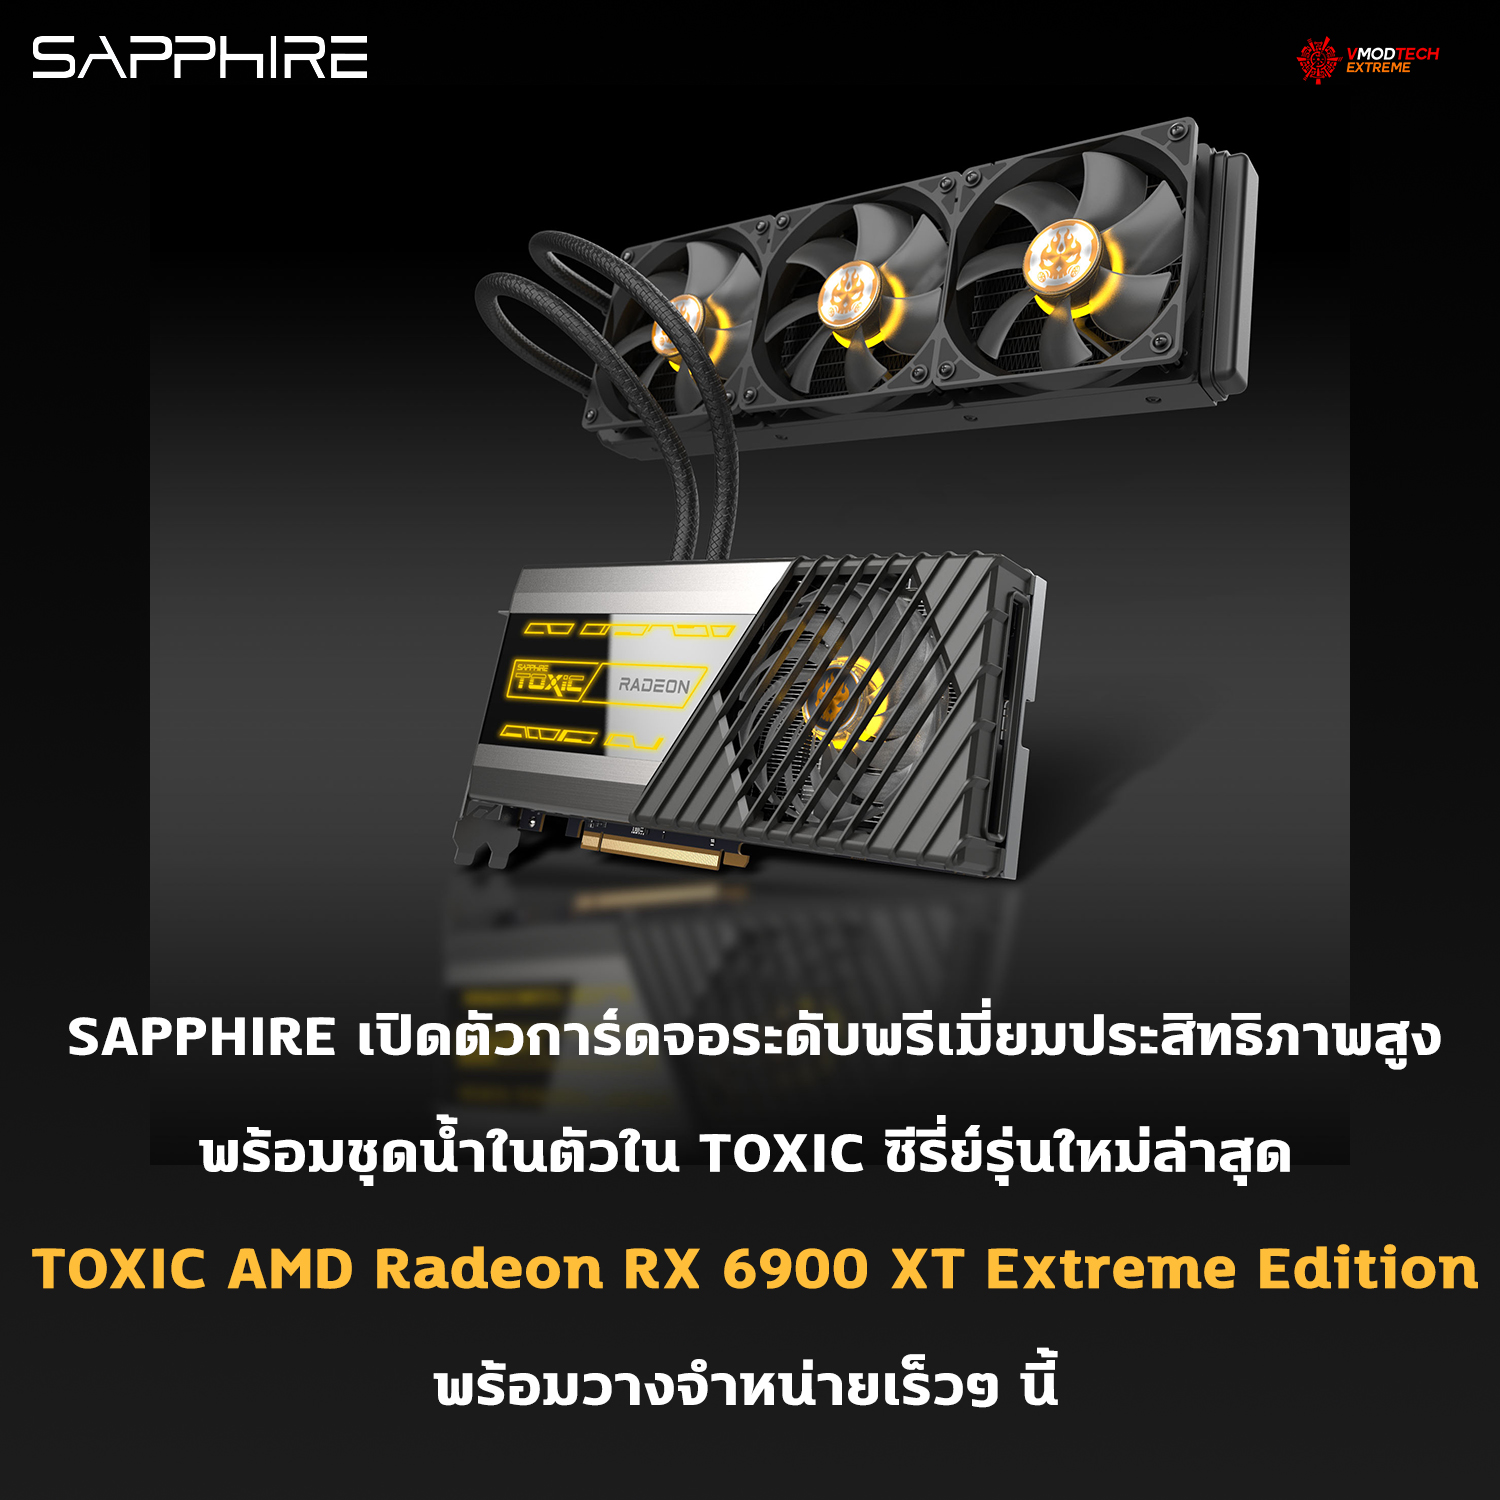 sapphire toxic amd radeon rx 6900 xt extreme edition SAPPHIRE เปิดตัวการ์ดจอระดับพรีเมี่ยมประสิทธิภาพสูงพร้อมชุดน้ำในตัวใน TOXIC ซีรี่ย์ในรุ่น SAPPHIRE TOXIC AMD Radeon RX 6900 XT Extreme Edition รุ่นใหม่ล่าสุด